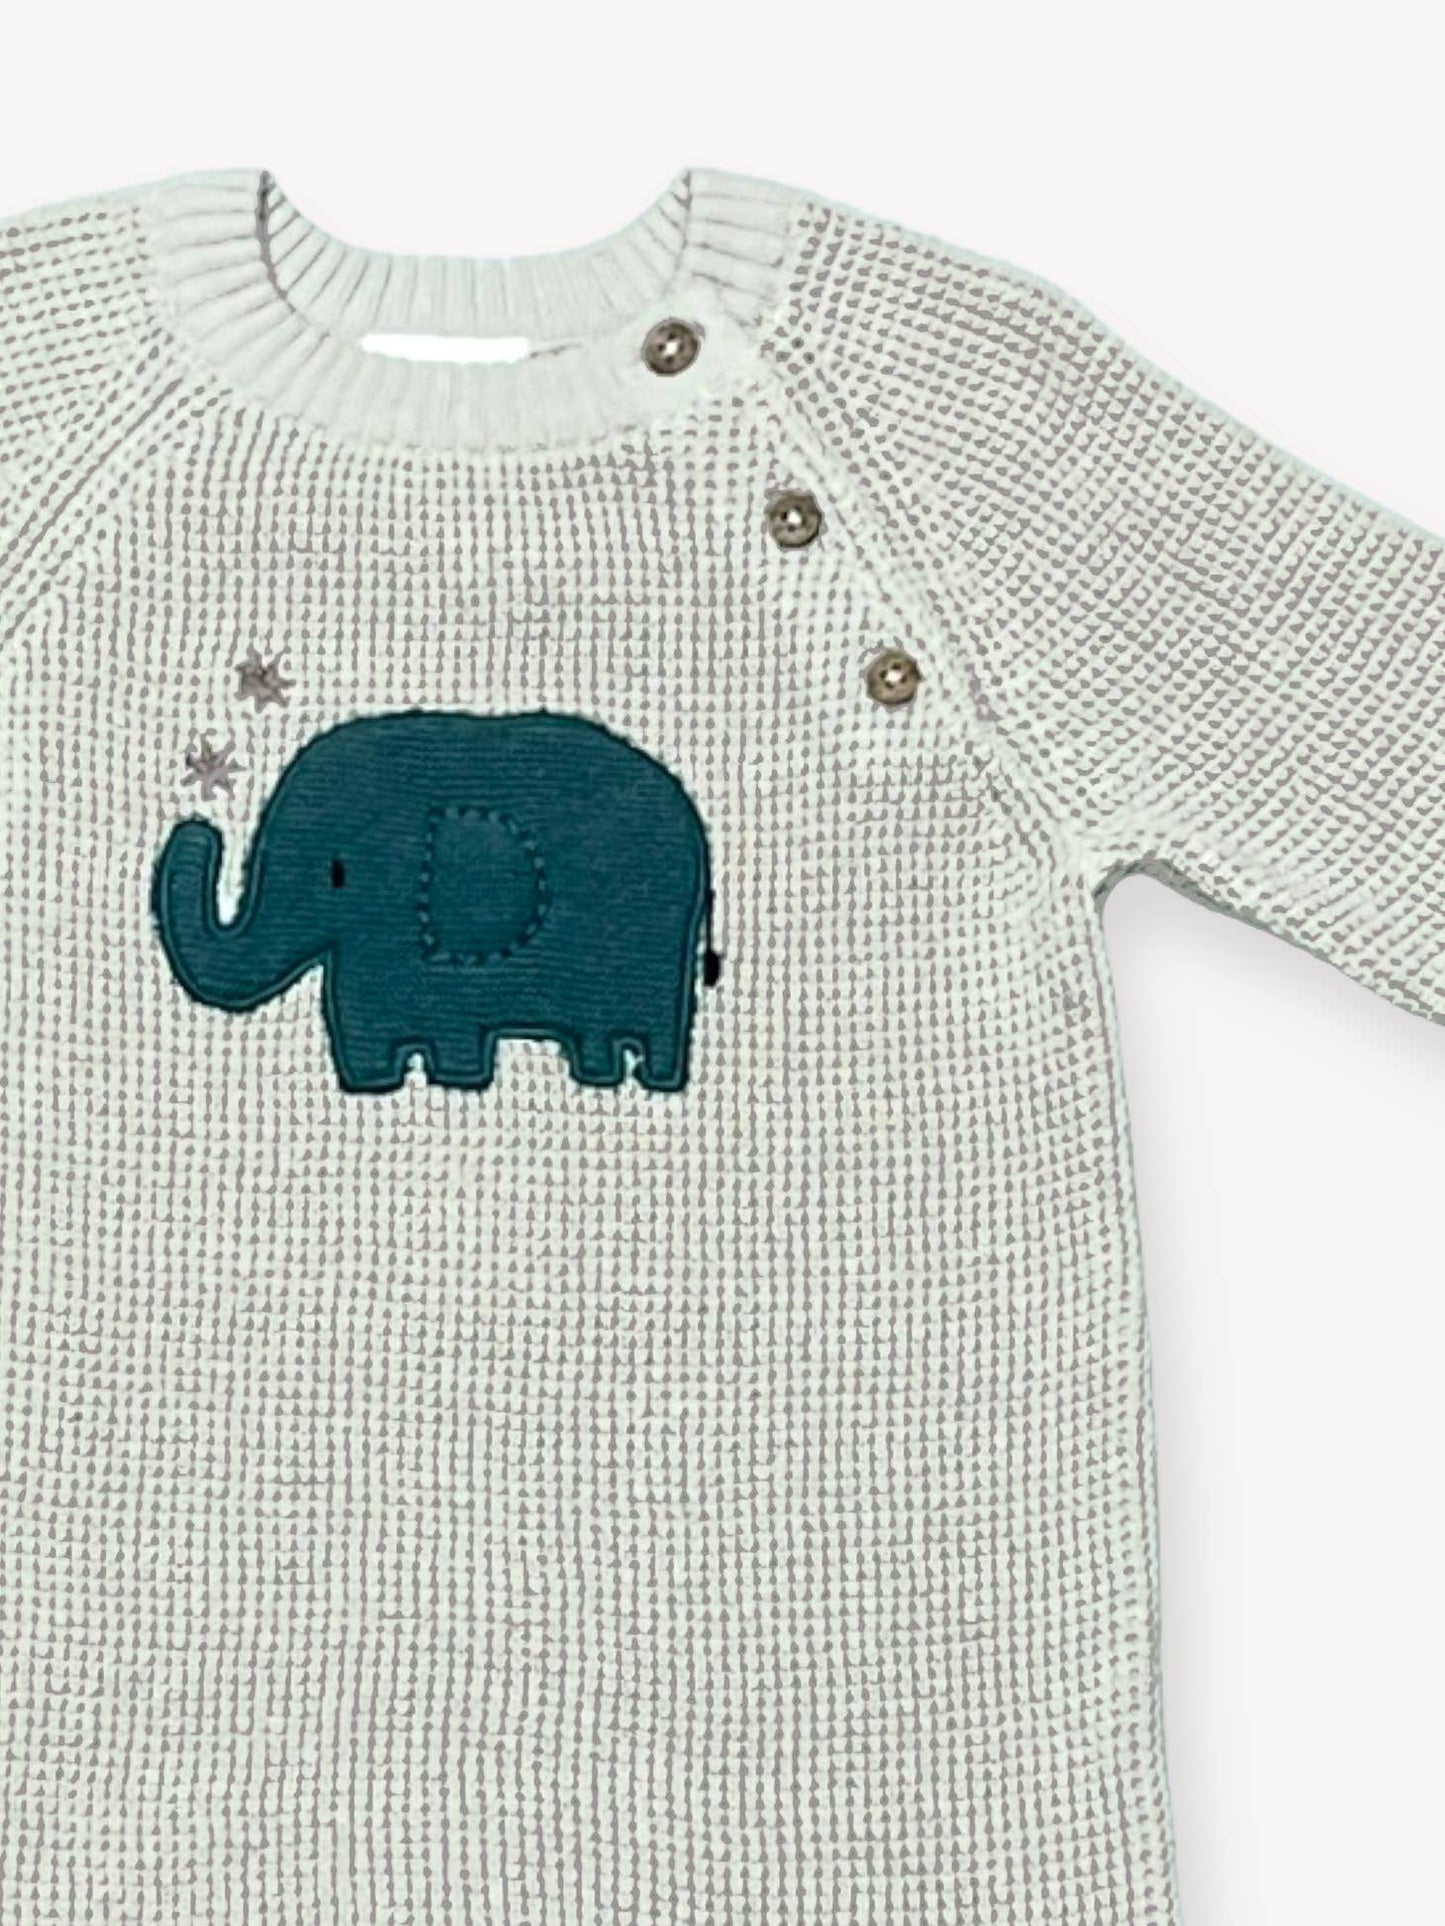 Elephant Jacquard Knit Baby Jumpsuit